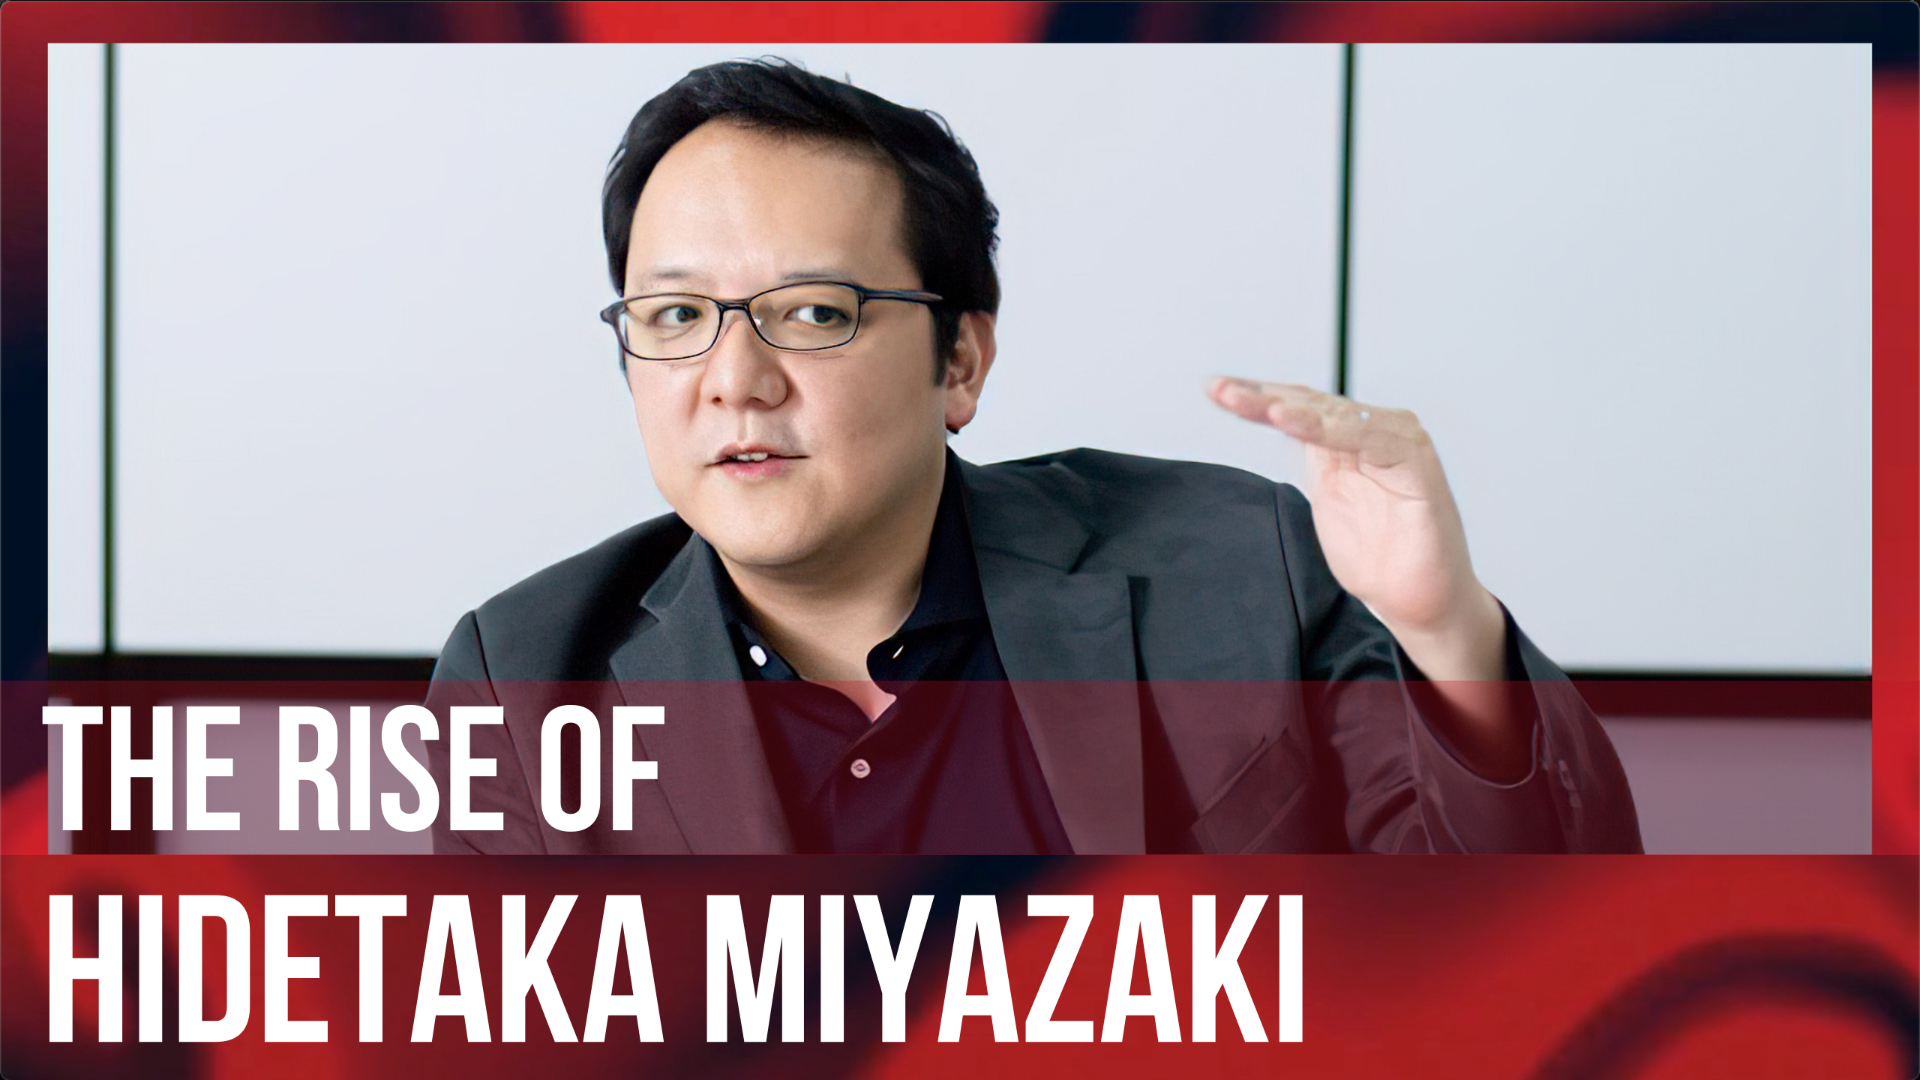 Bloodborne creator Hidetaka Miyazaki: 'I didn't have a dream. I